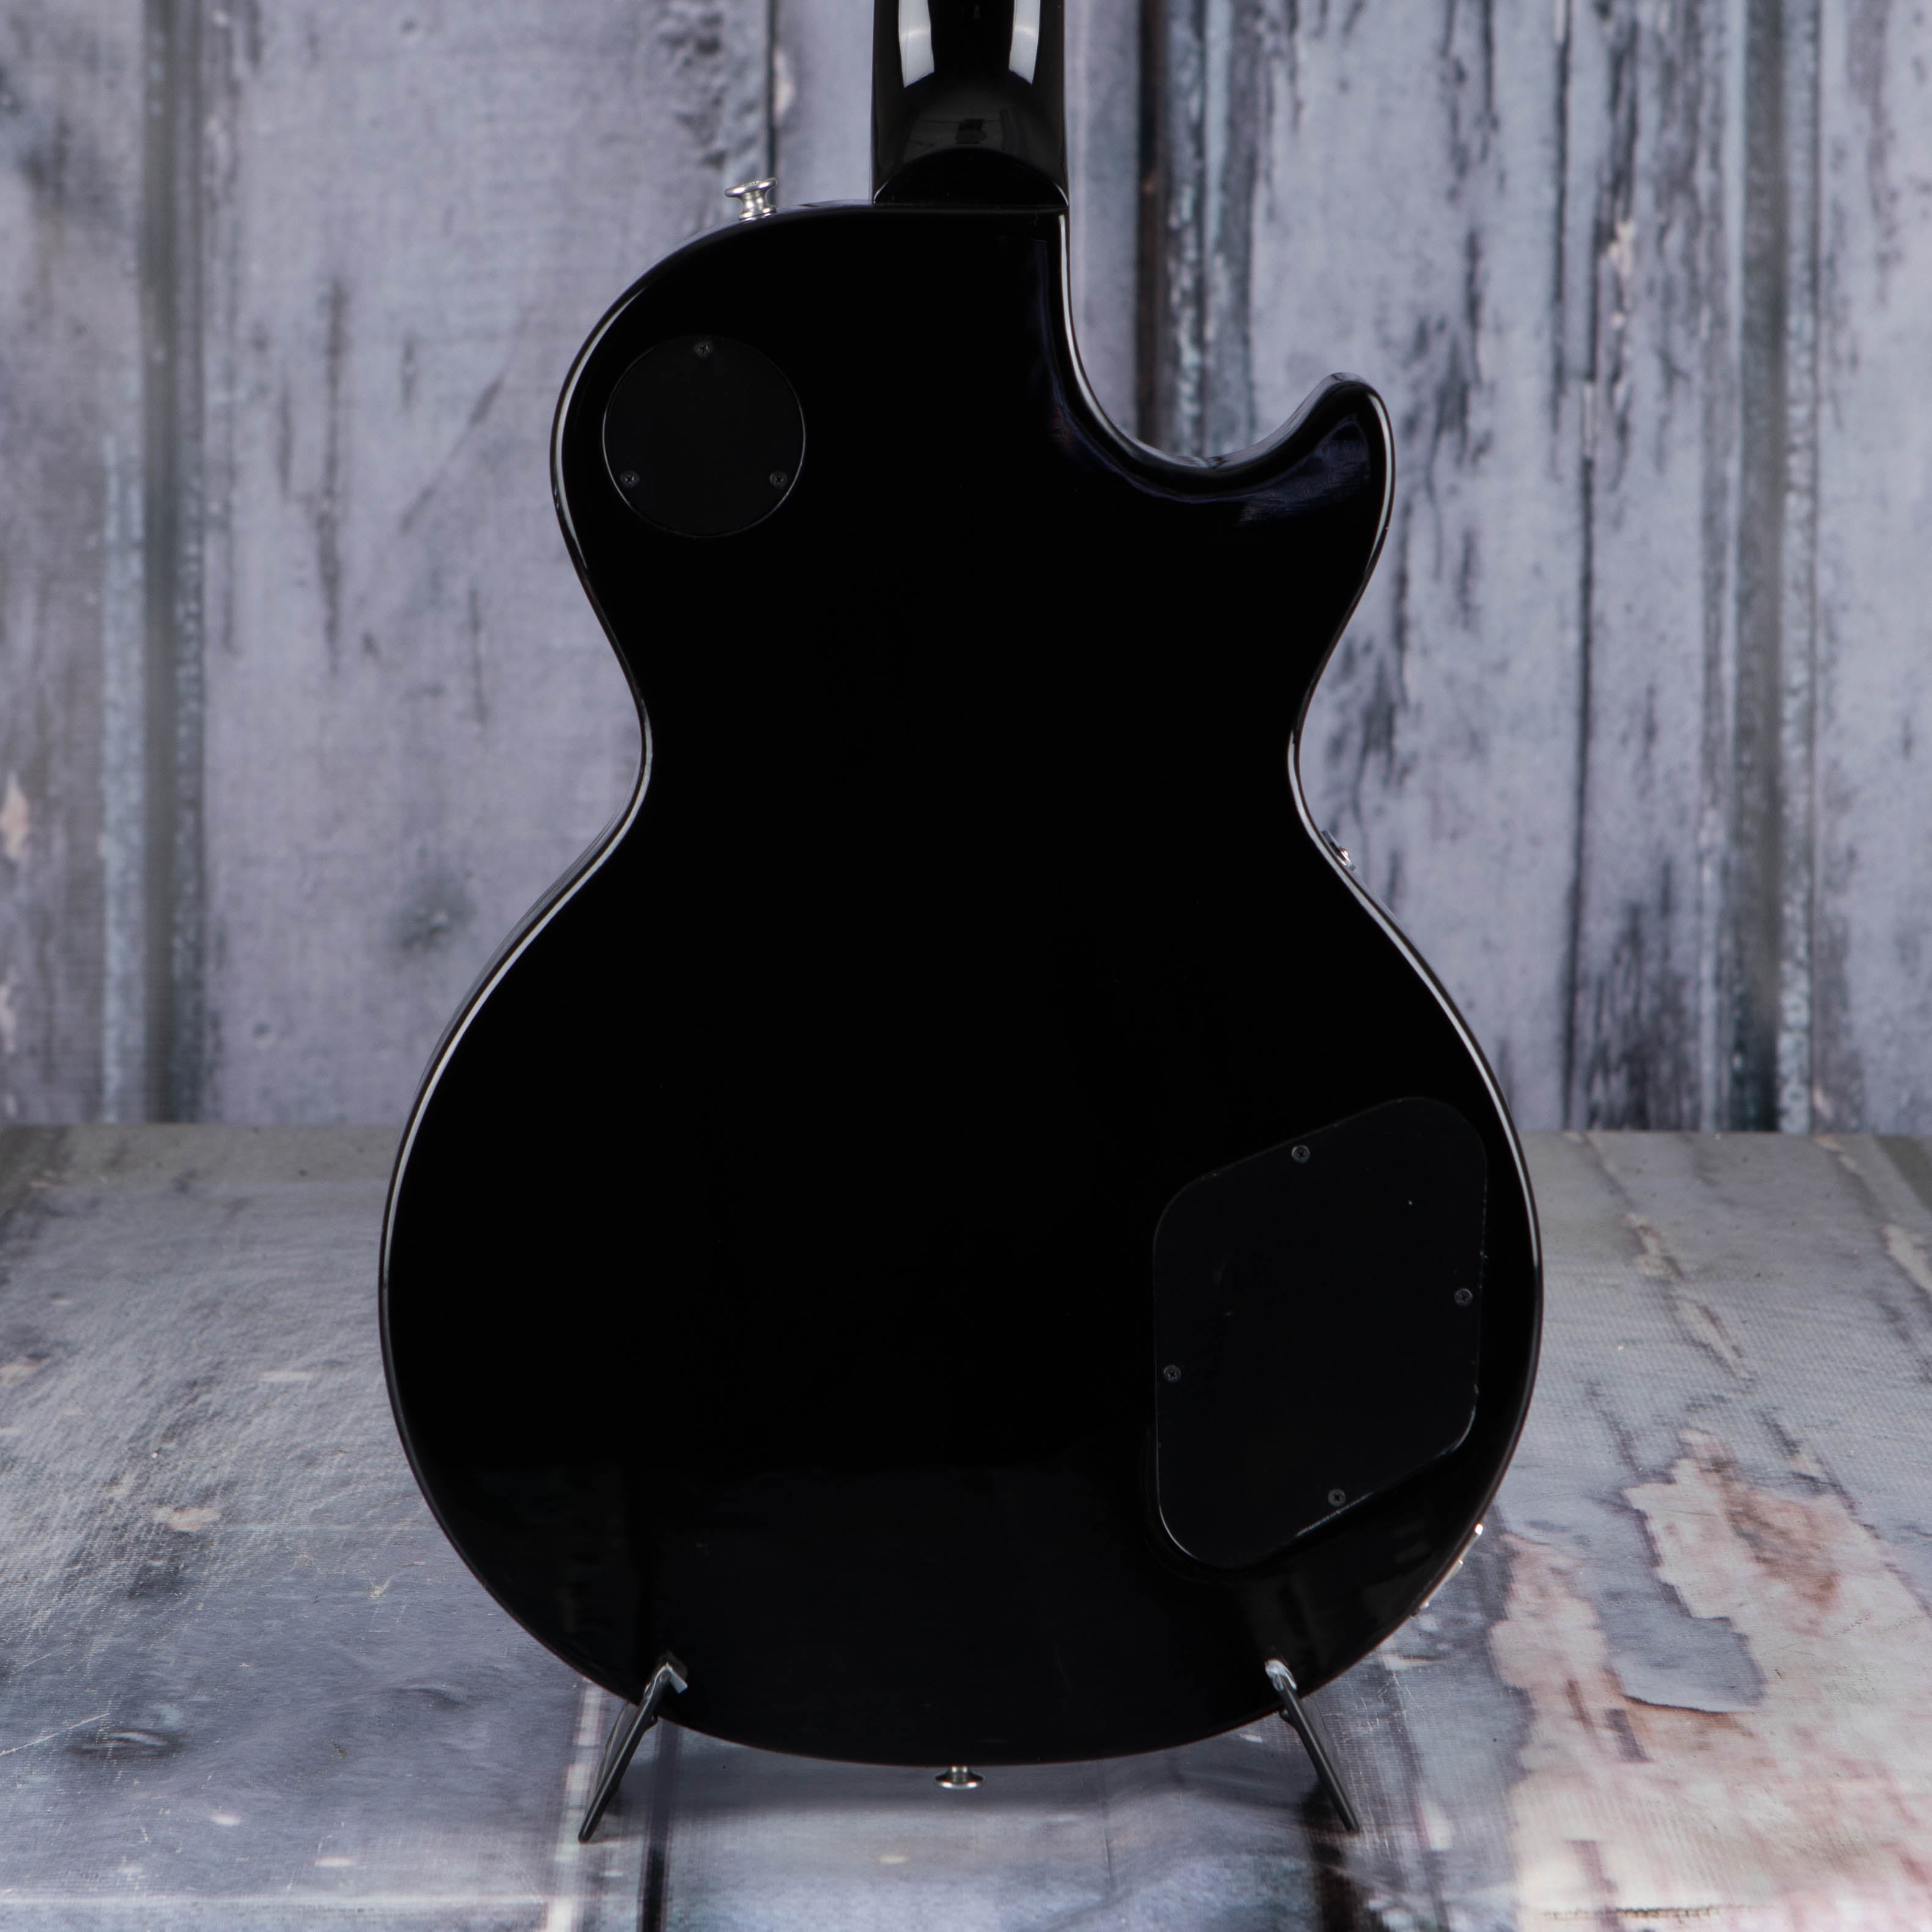 Gibson USA Les Paul Studio Left-Handed Electric Guitar, Ebony, back closeup